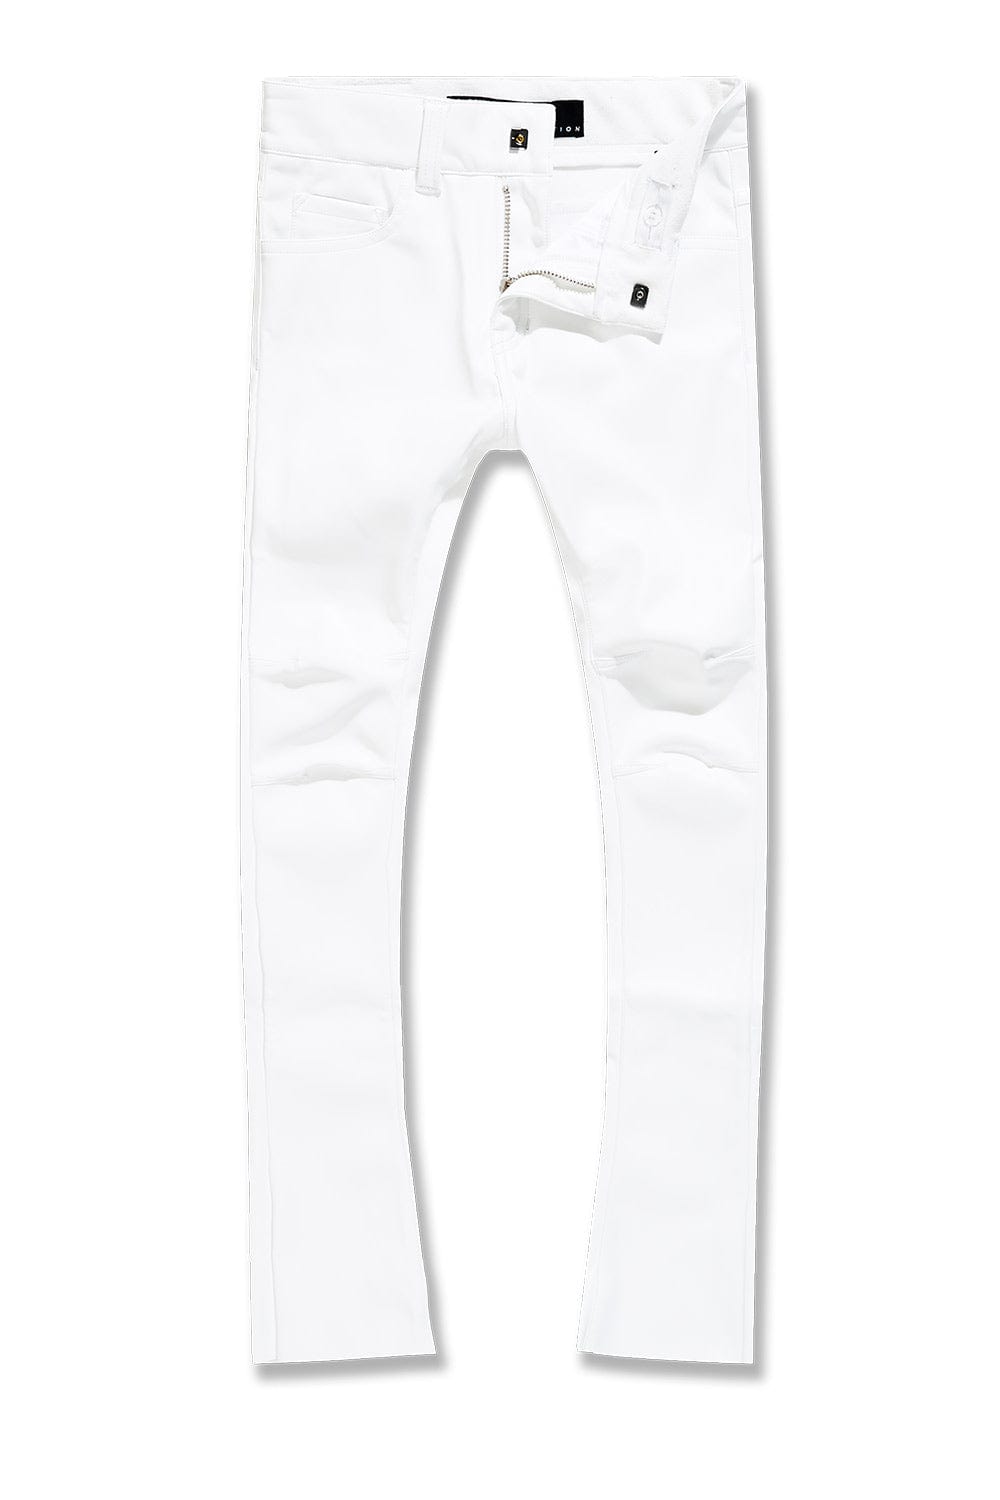 JC Kids Kids Stacked Thriller Pants (Name Your Price) 2 / White